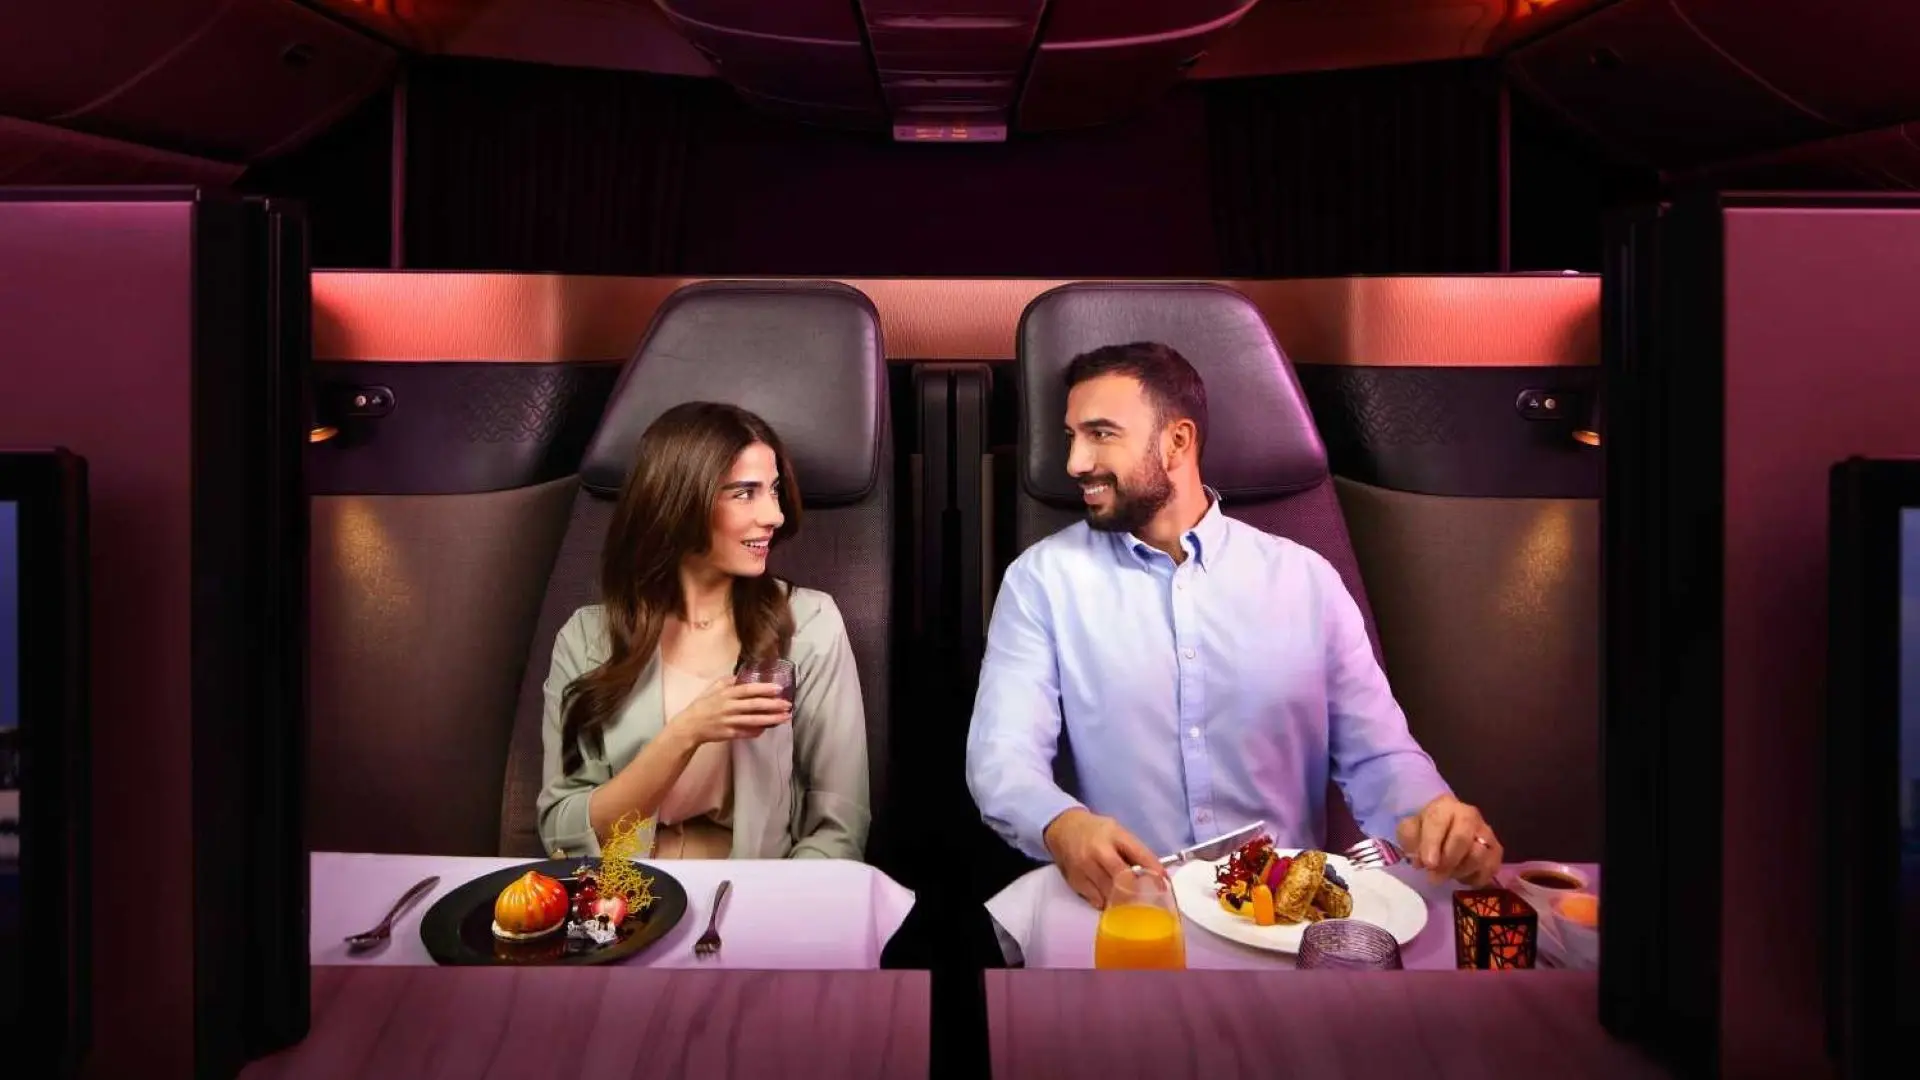 Airlines News - Qatar Airways debuts Sama 2.0 - its AI digital human cabin crew